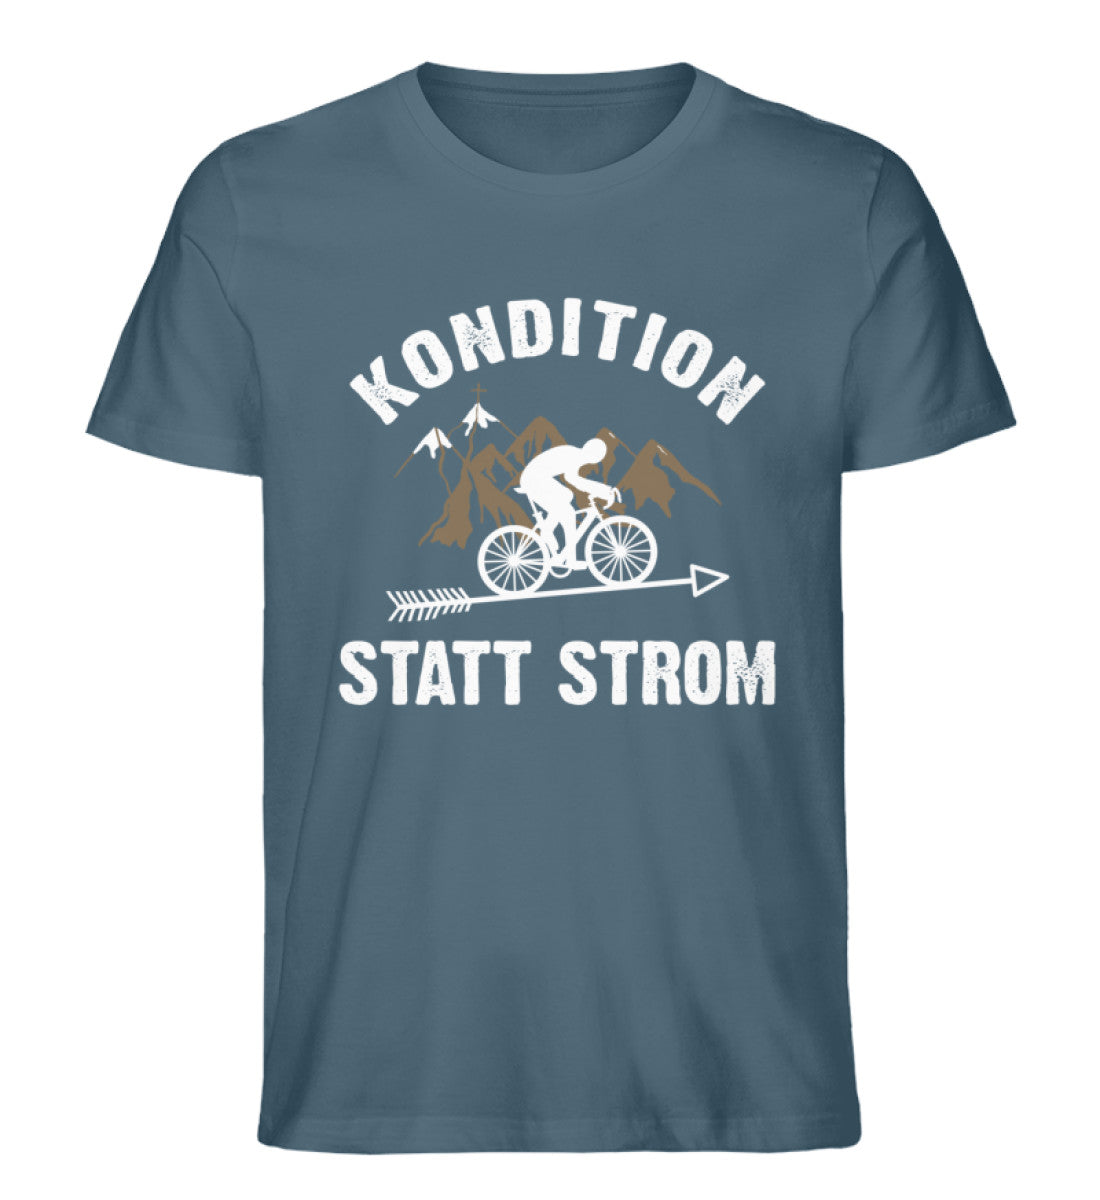 Kondition statt Strom - Herren Premium Organic T-Shirt fahrrad mountainbike Stargazer